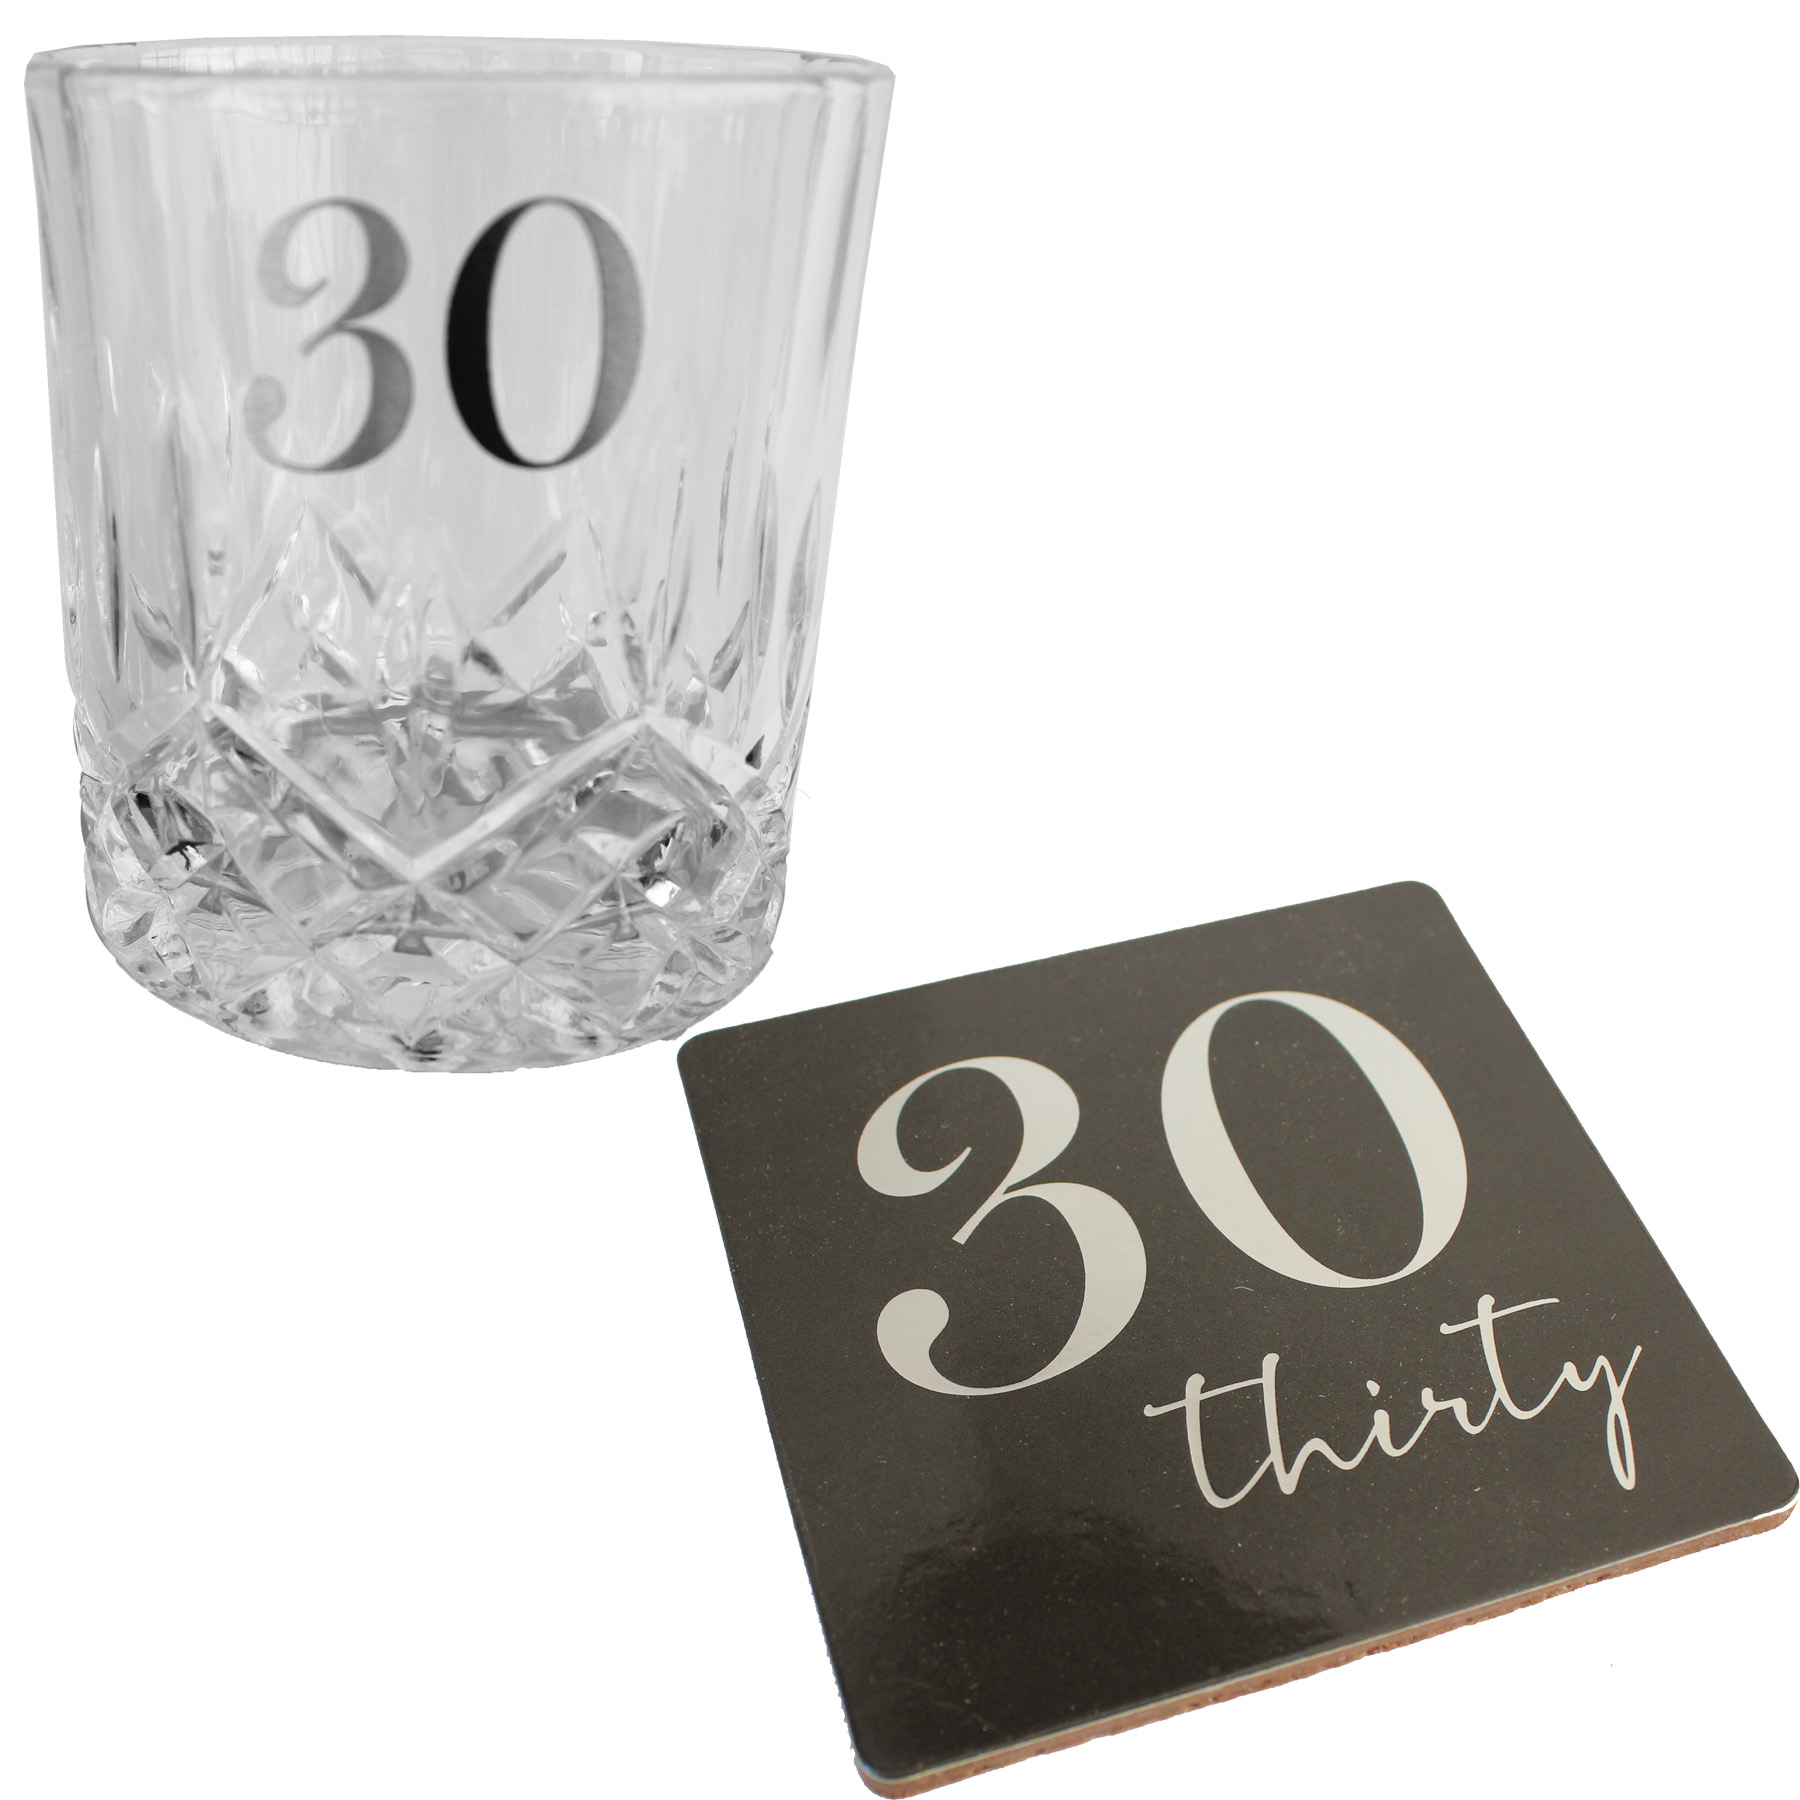 Cut Glass Whisky Tumbler and Coaster Set Gift Box - 30th Birthday